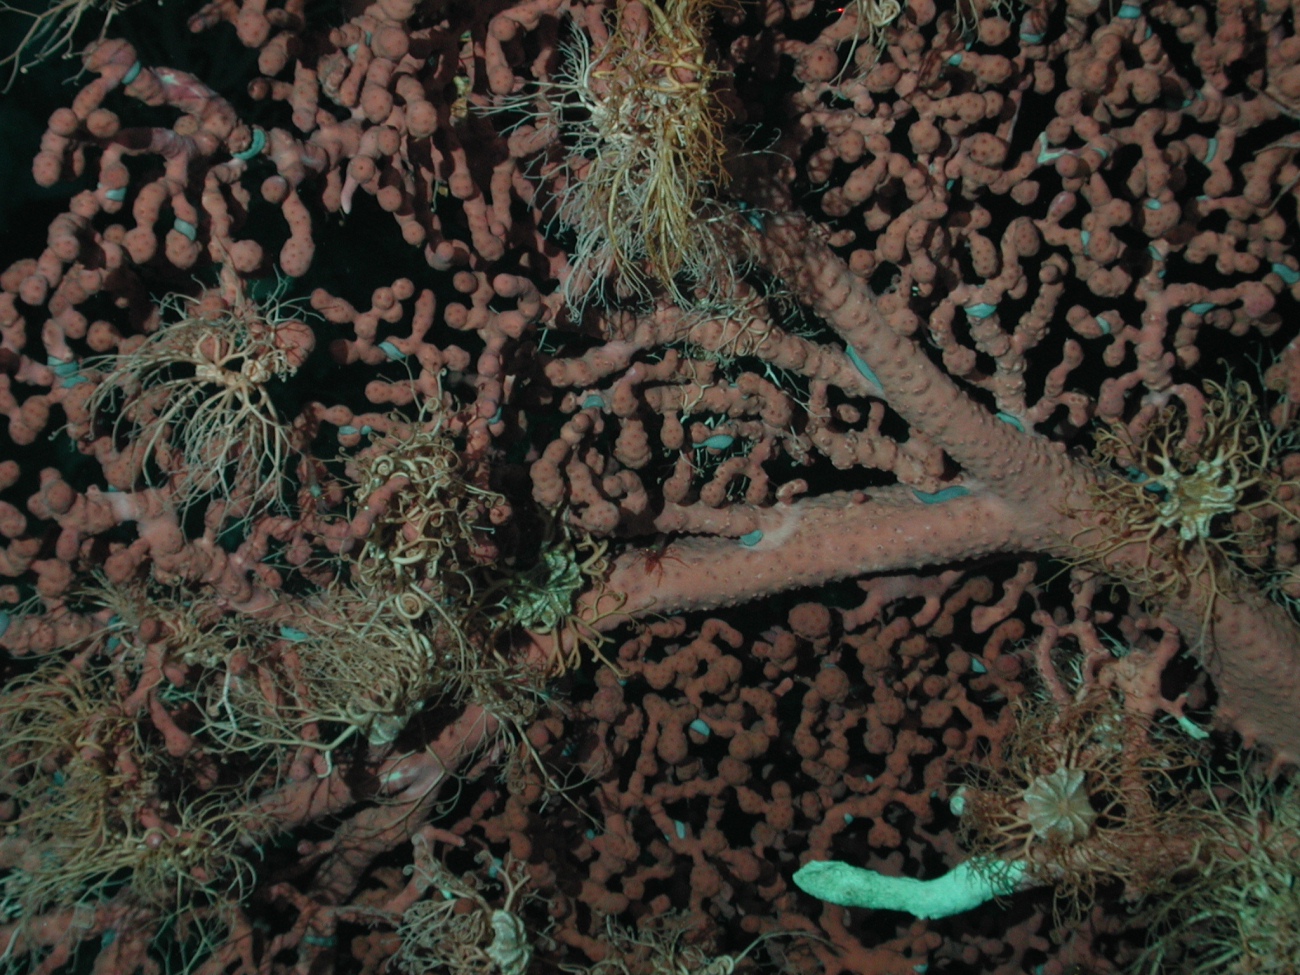 Bubblegum coral (Paragorgia arborea) with basket starfish